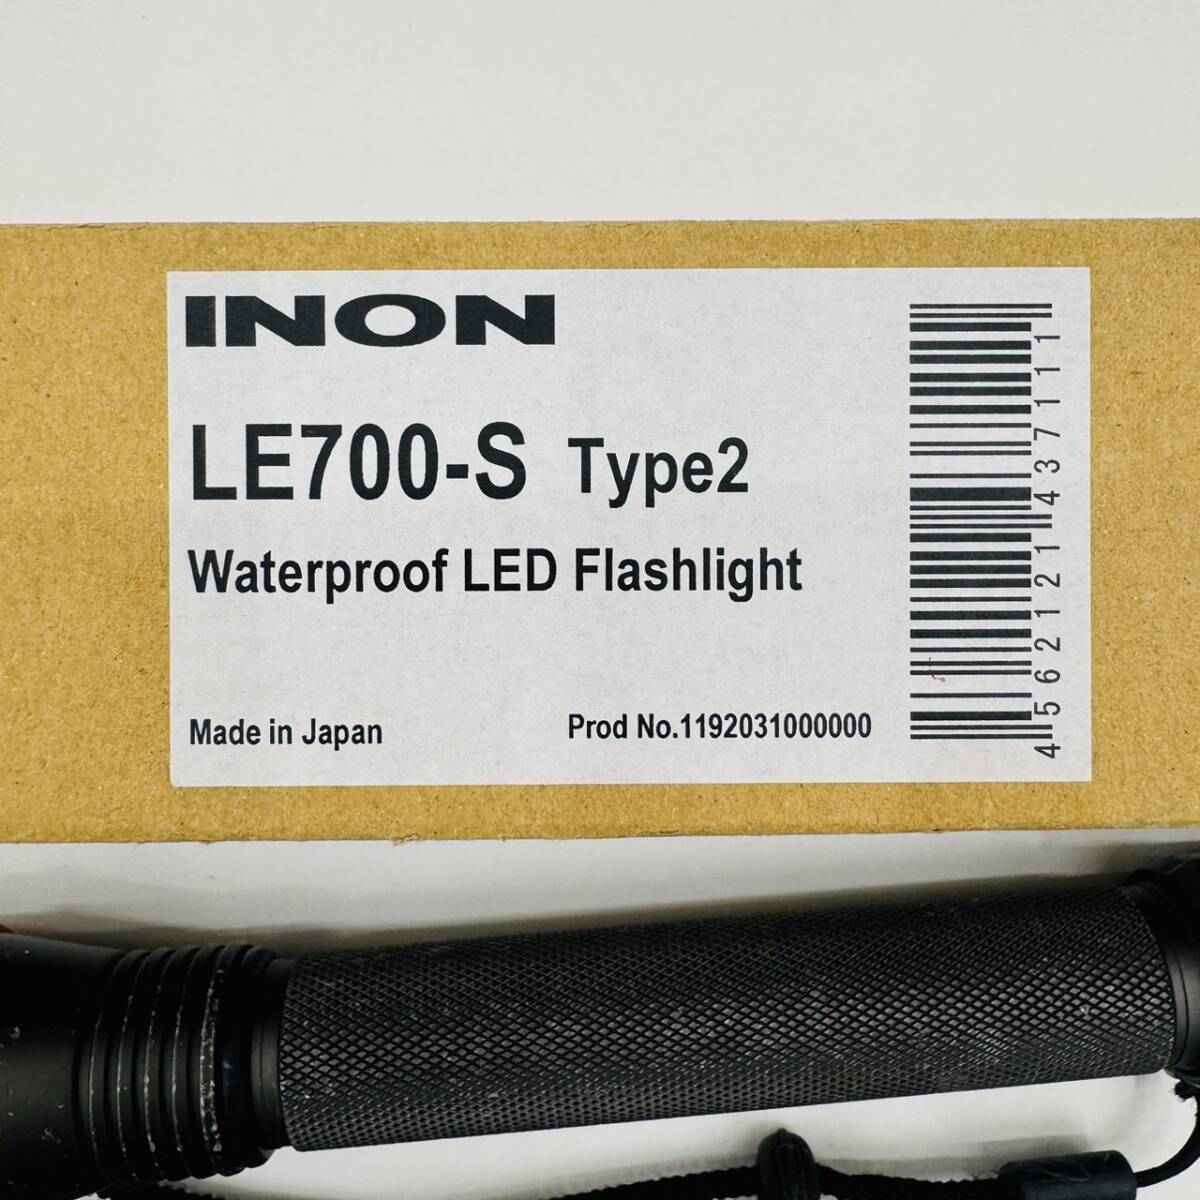 [MS-202]1 иен ~ INONi non подводный свет LE700-S2 спот дайвинг + Attachment комплект свет только электризация проверка settled б/у хранение товар 